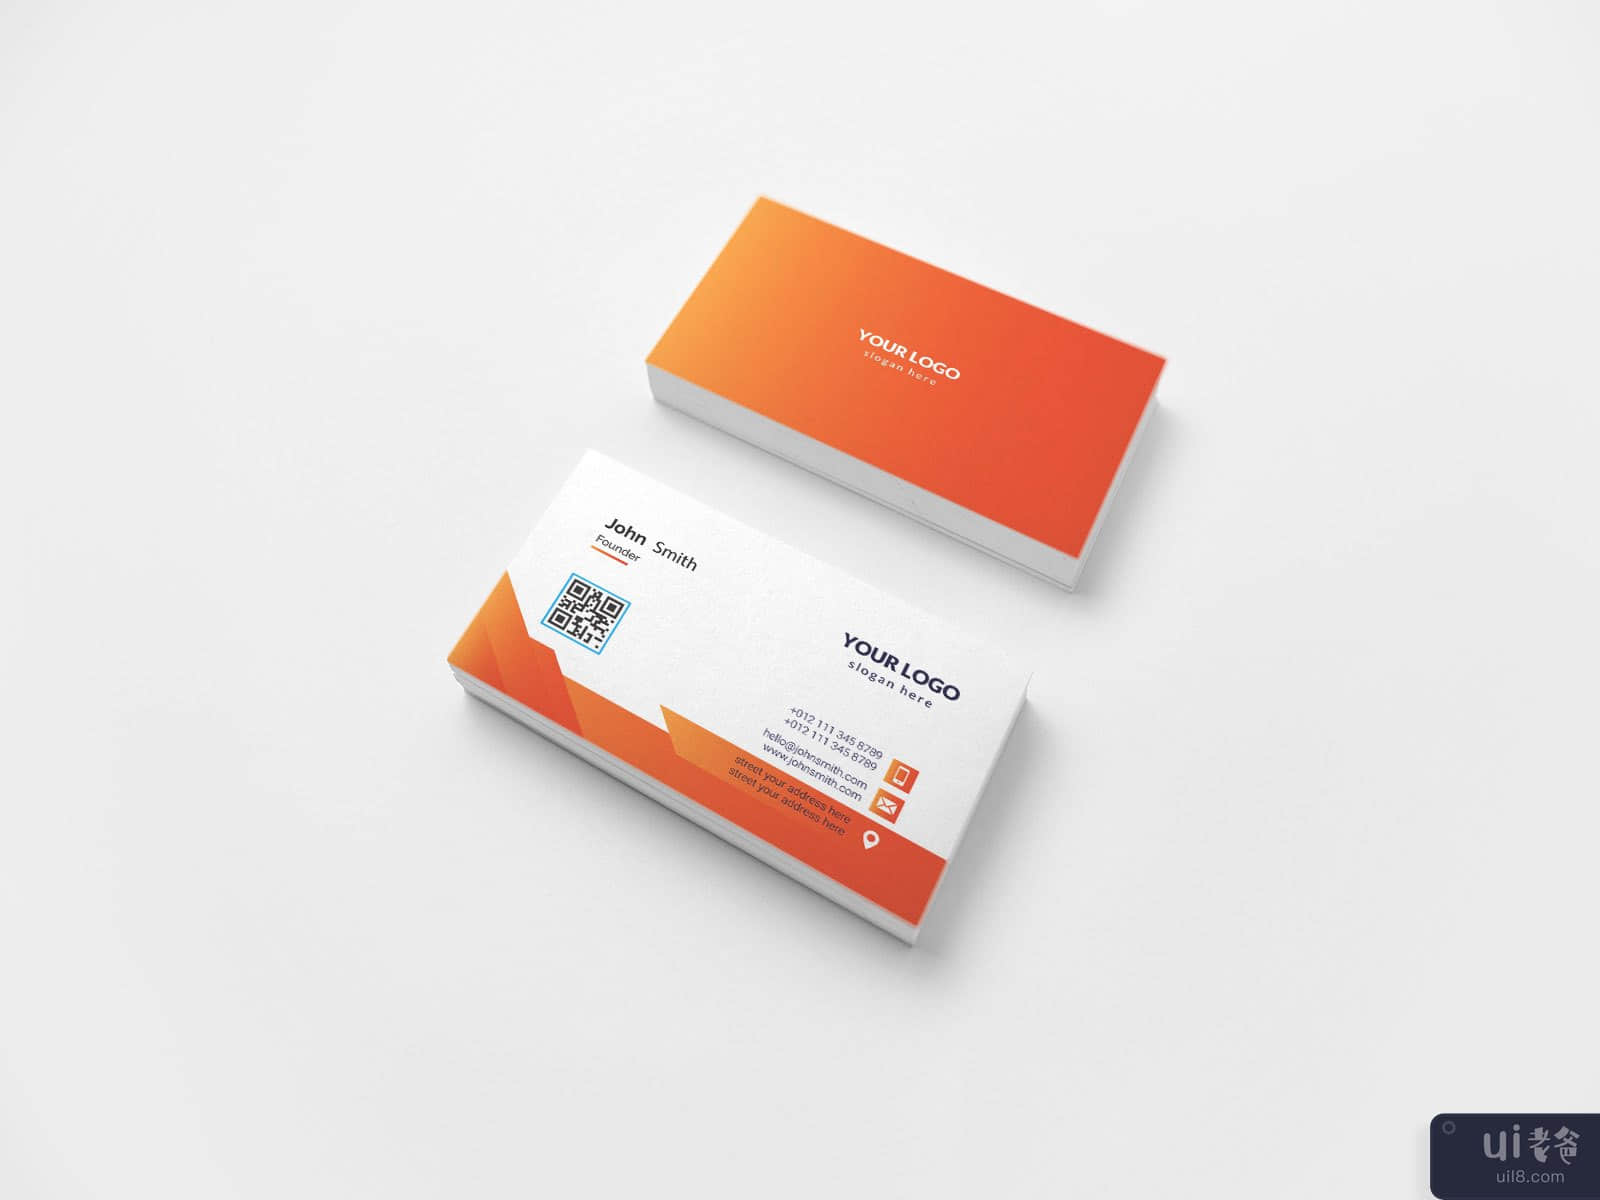 Creative Business Card Template Design